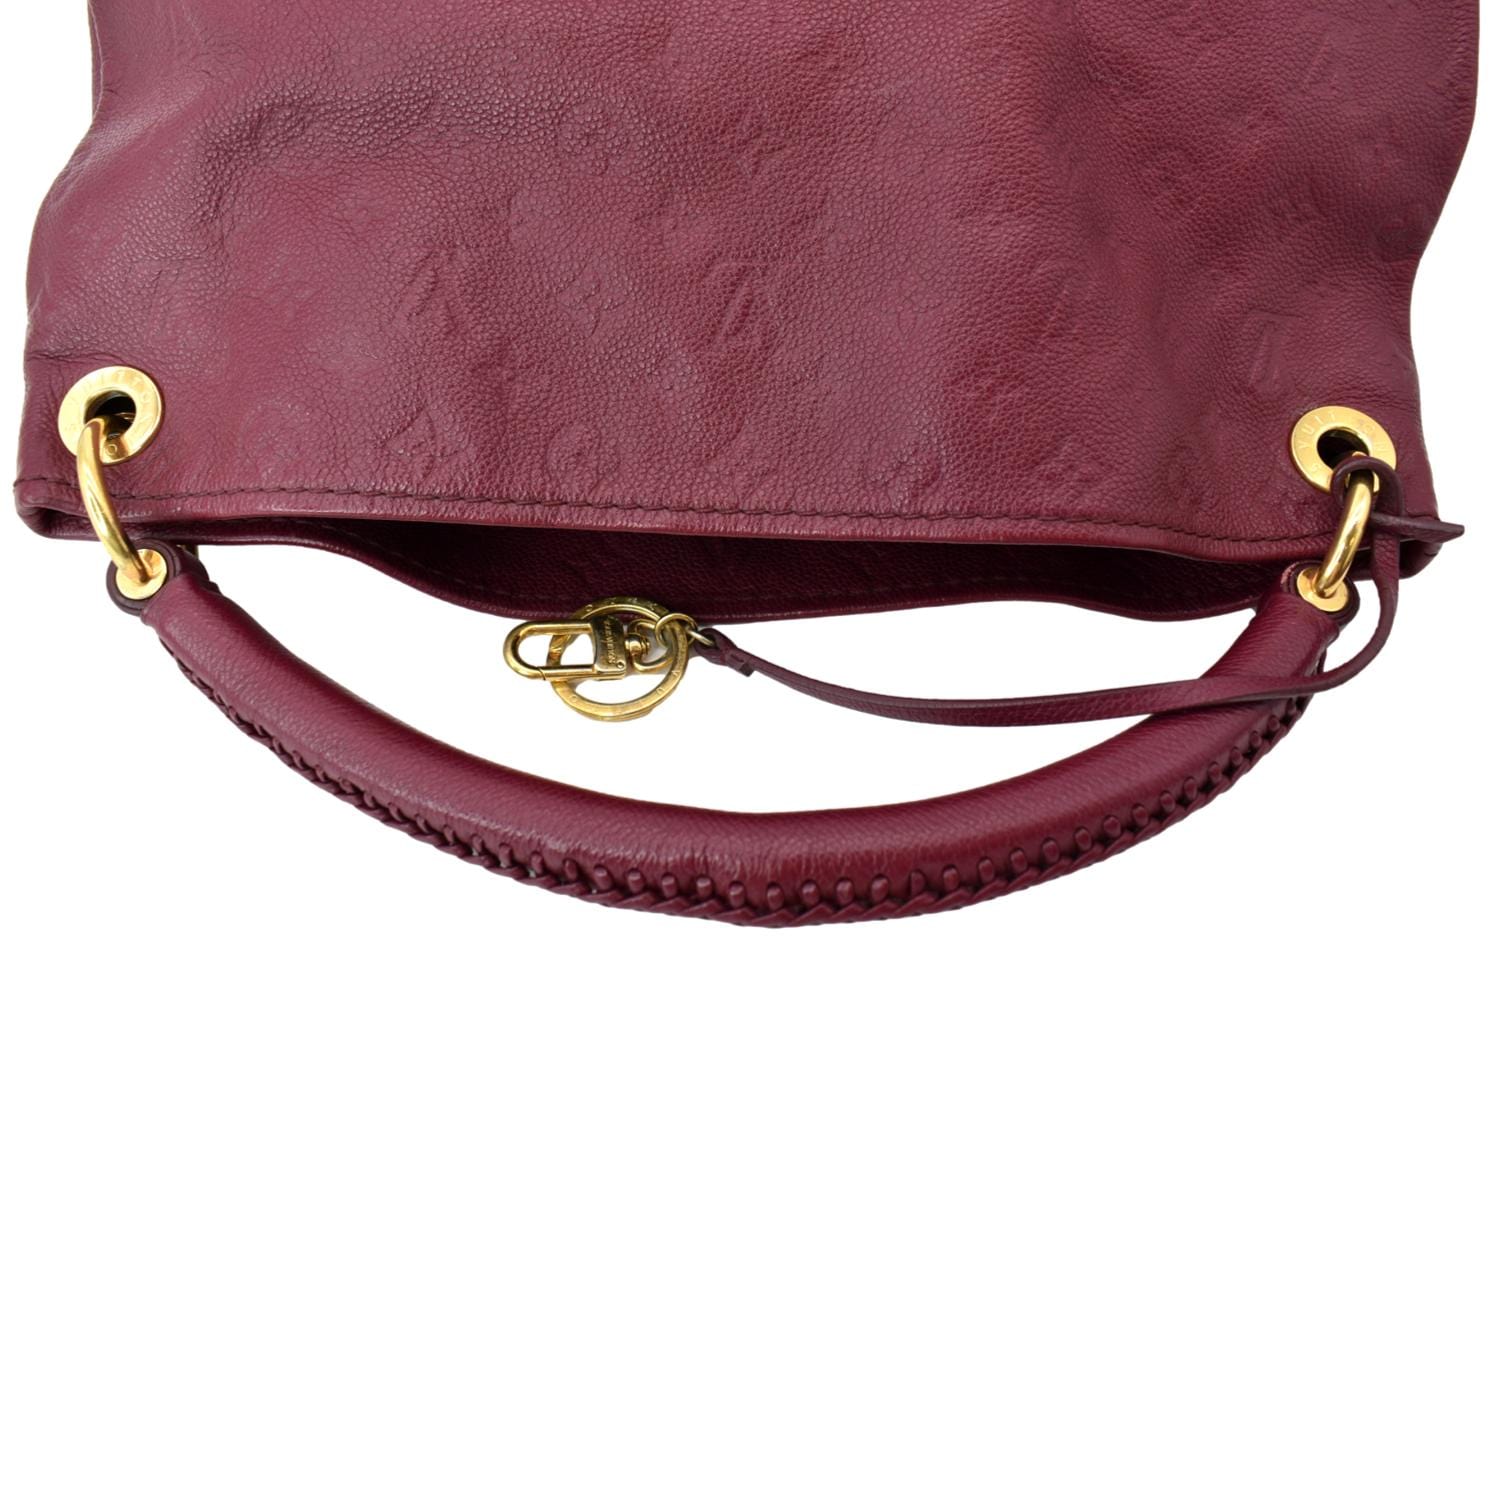 Authentic Louis Vuitton Pink Empreinte Leather Artsy mm Hobo Bag